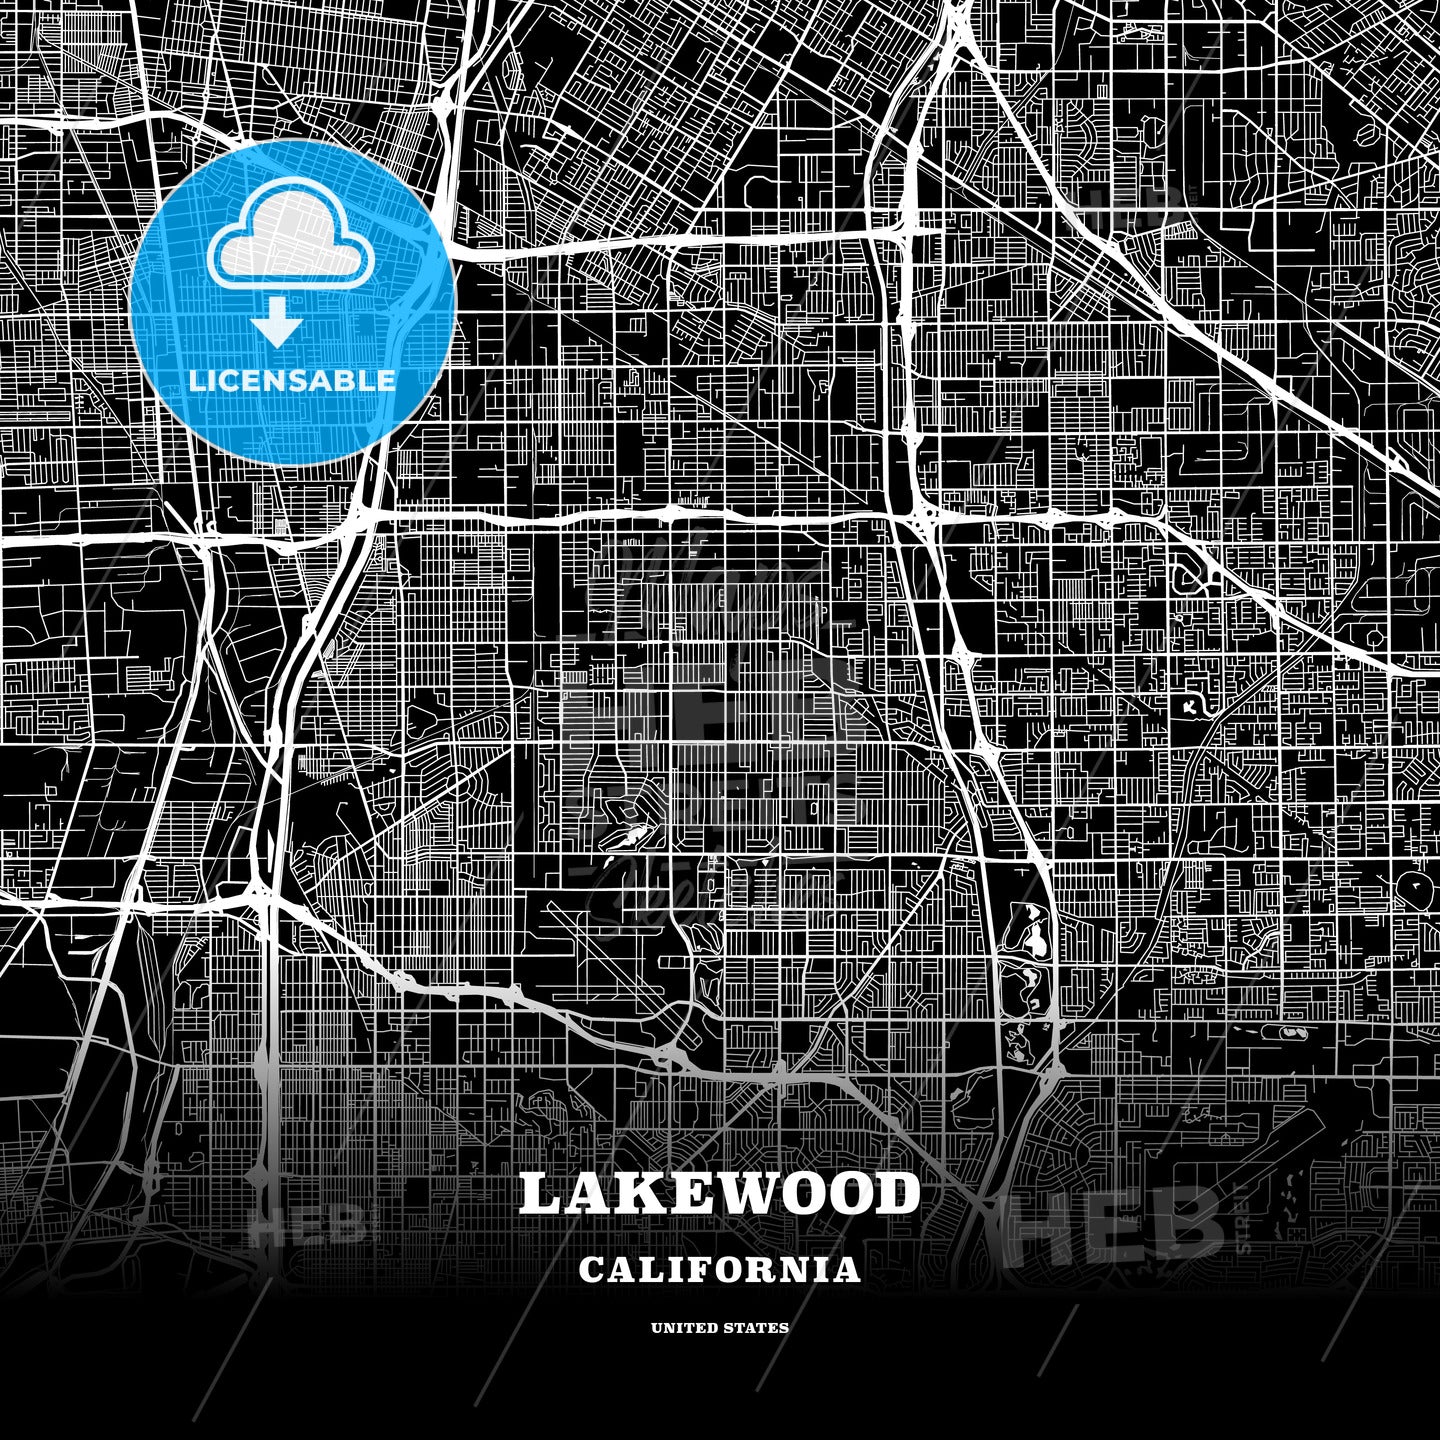 Lakewood, California, USA map